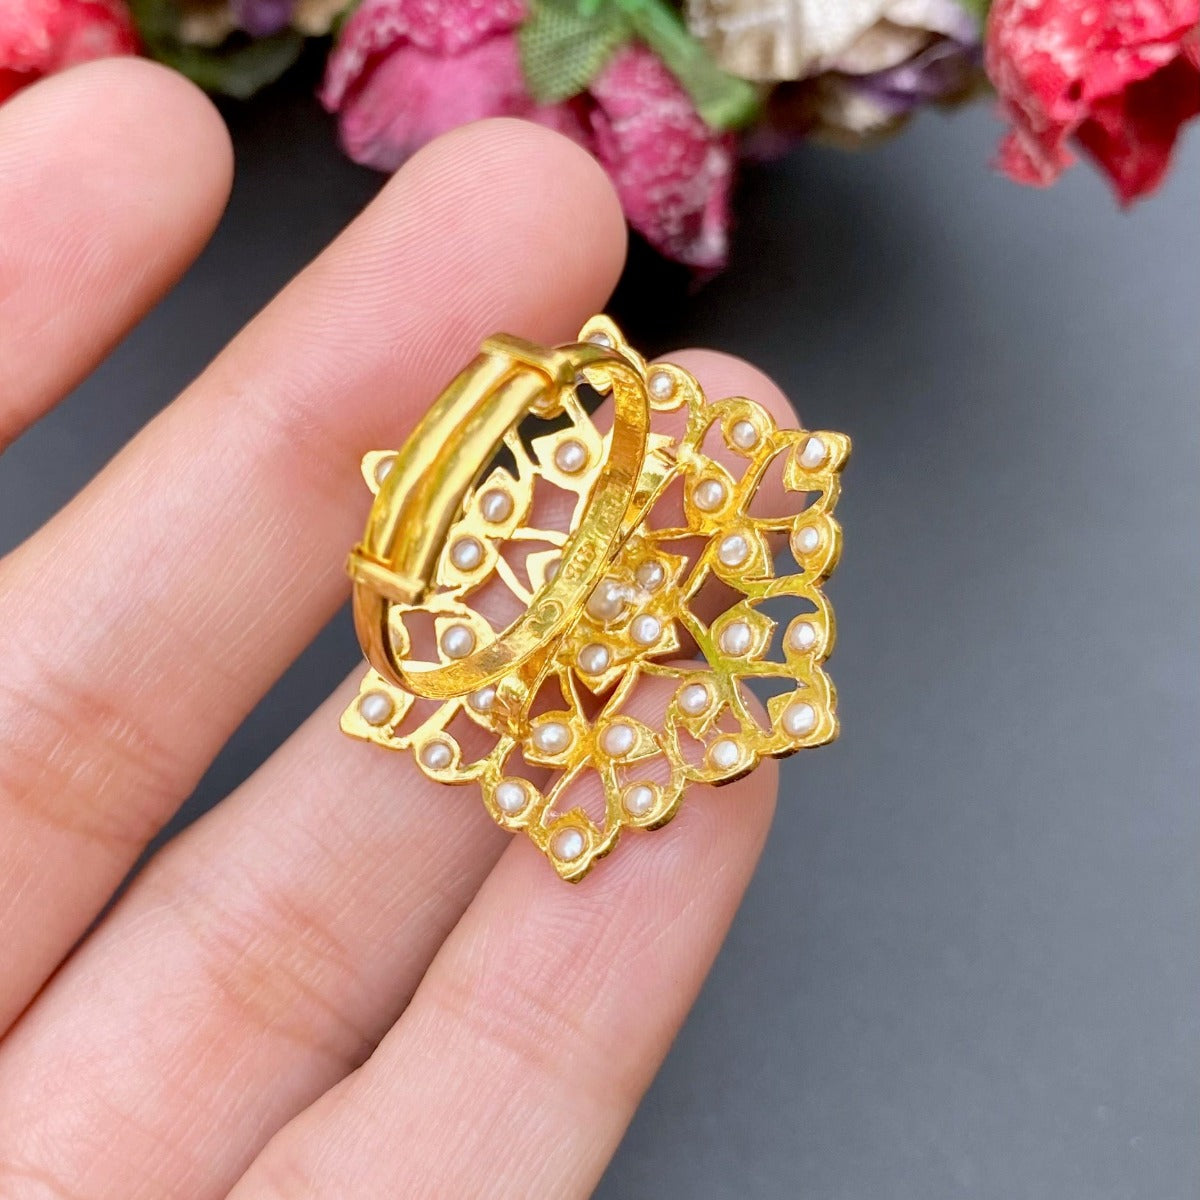 real gold jadau ring adjustable size